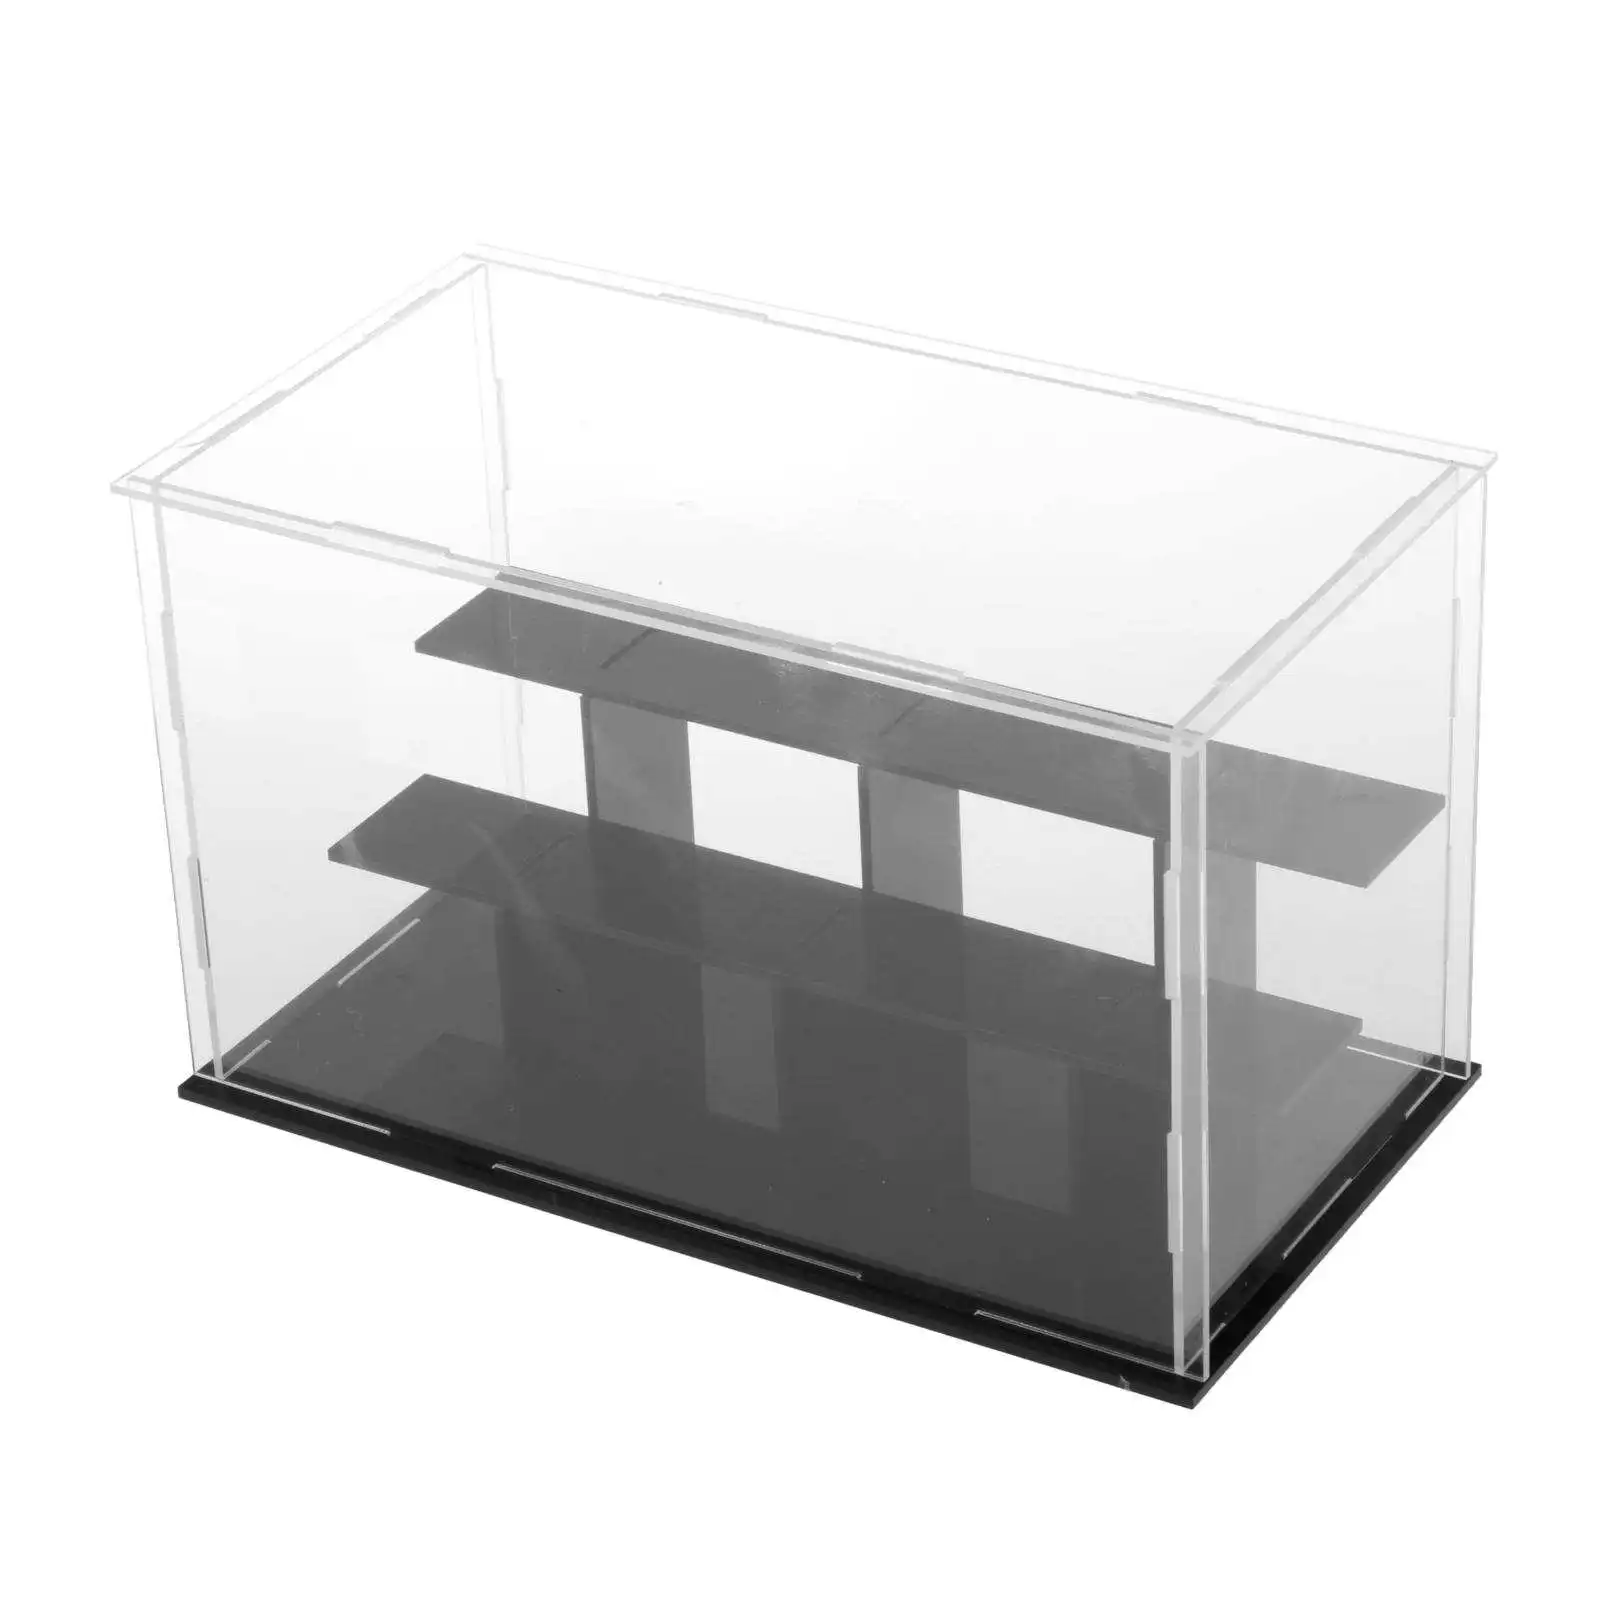 1x Model Doll Display Case Box Acrylic Dustproof Showcase 3 Step for Jewelry